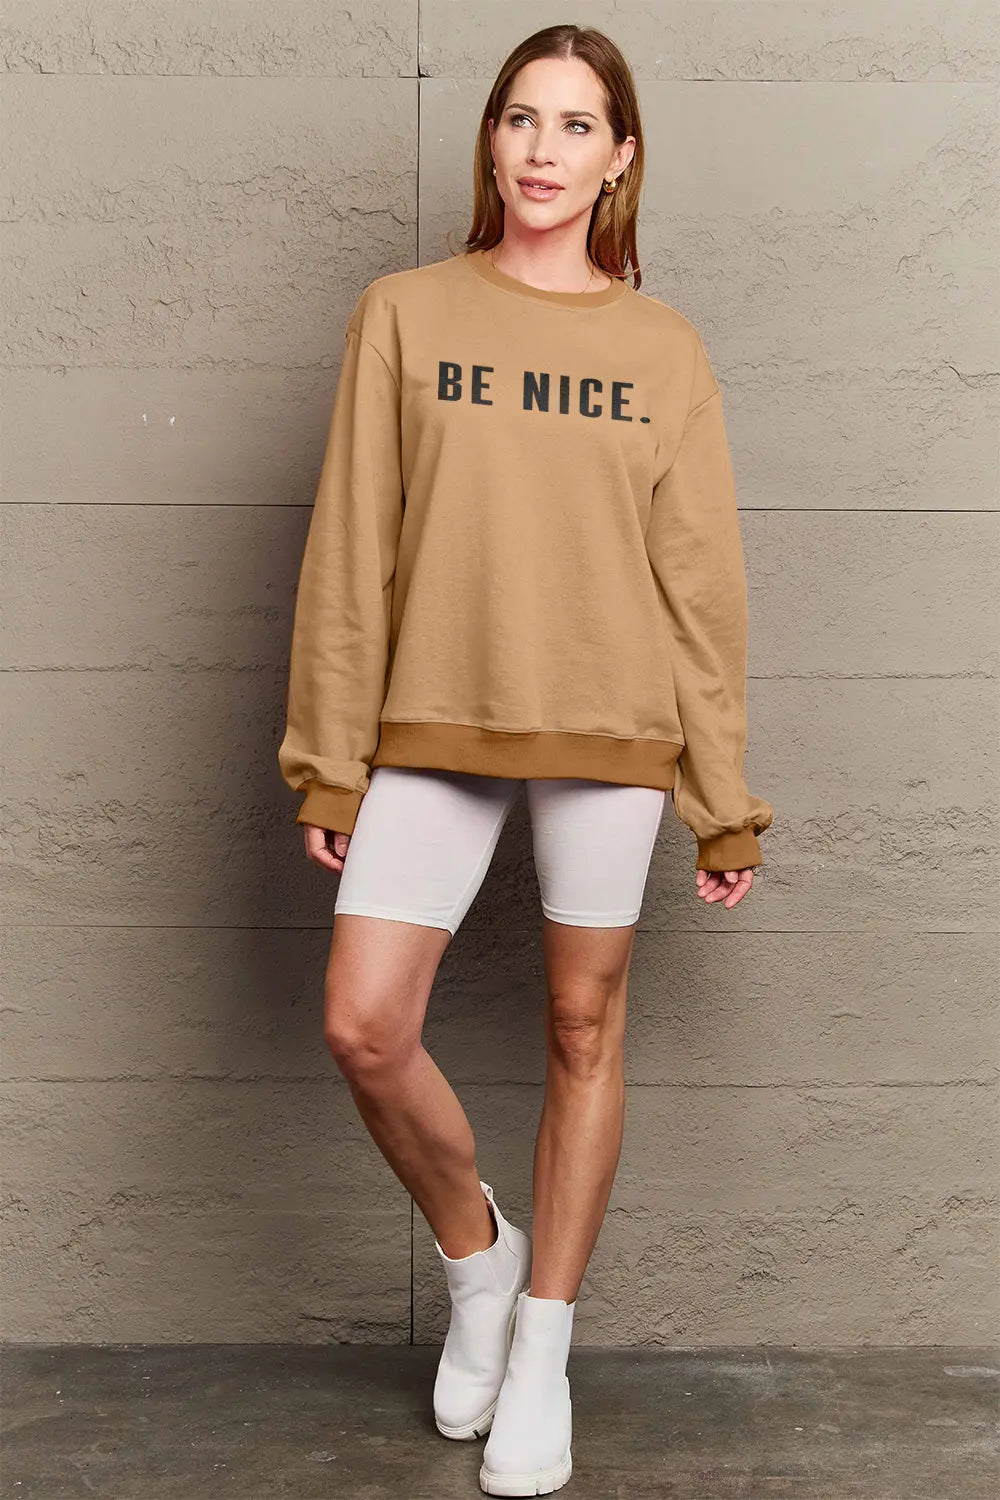 Simply Love Full Size BE NICE Graphic Sweatshirt Trendsi